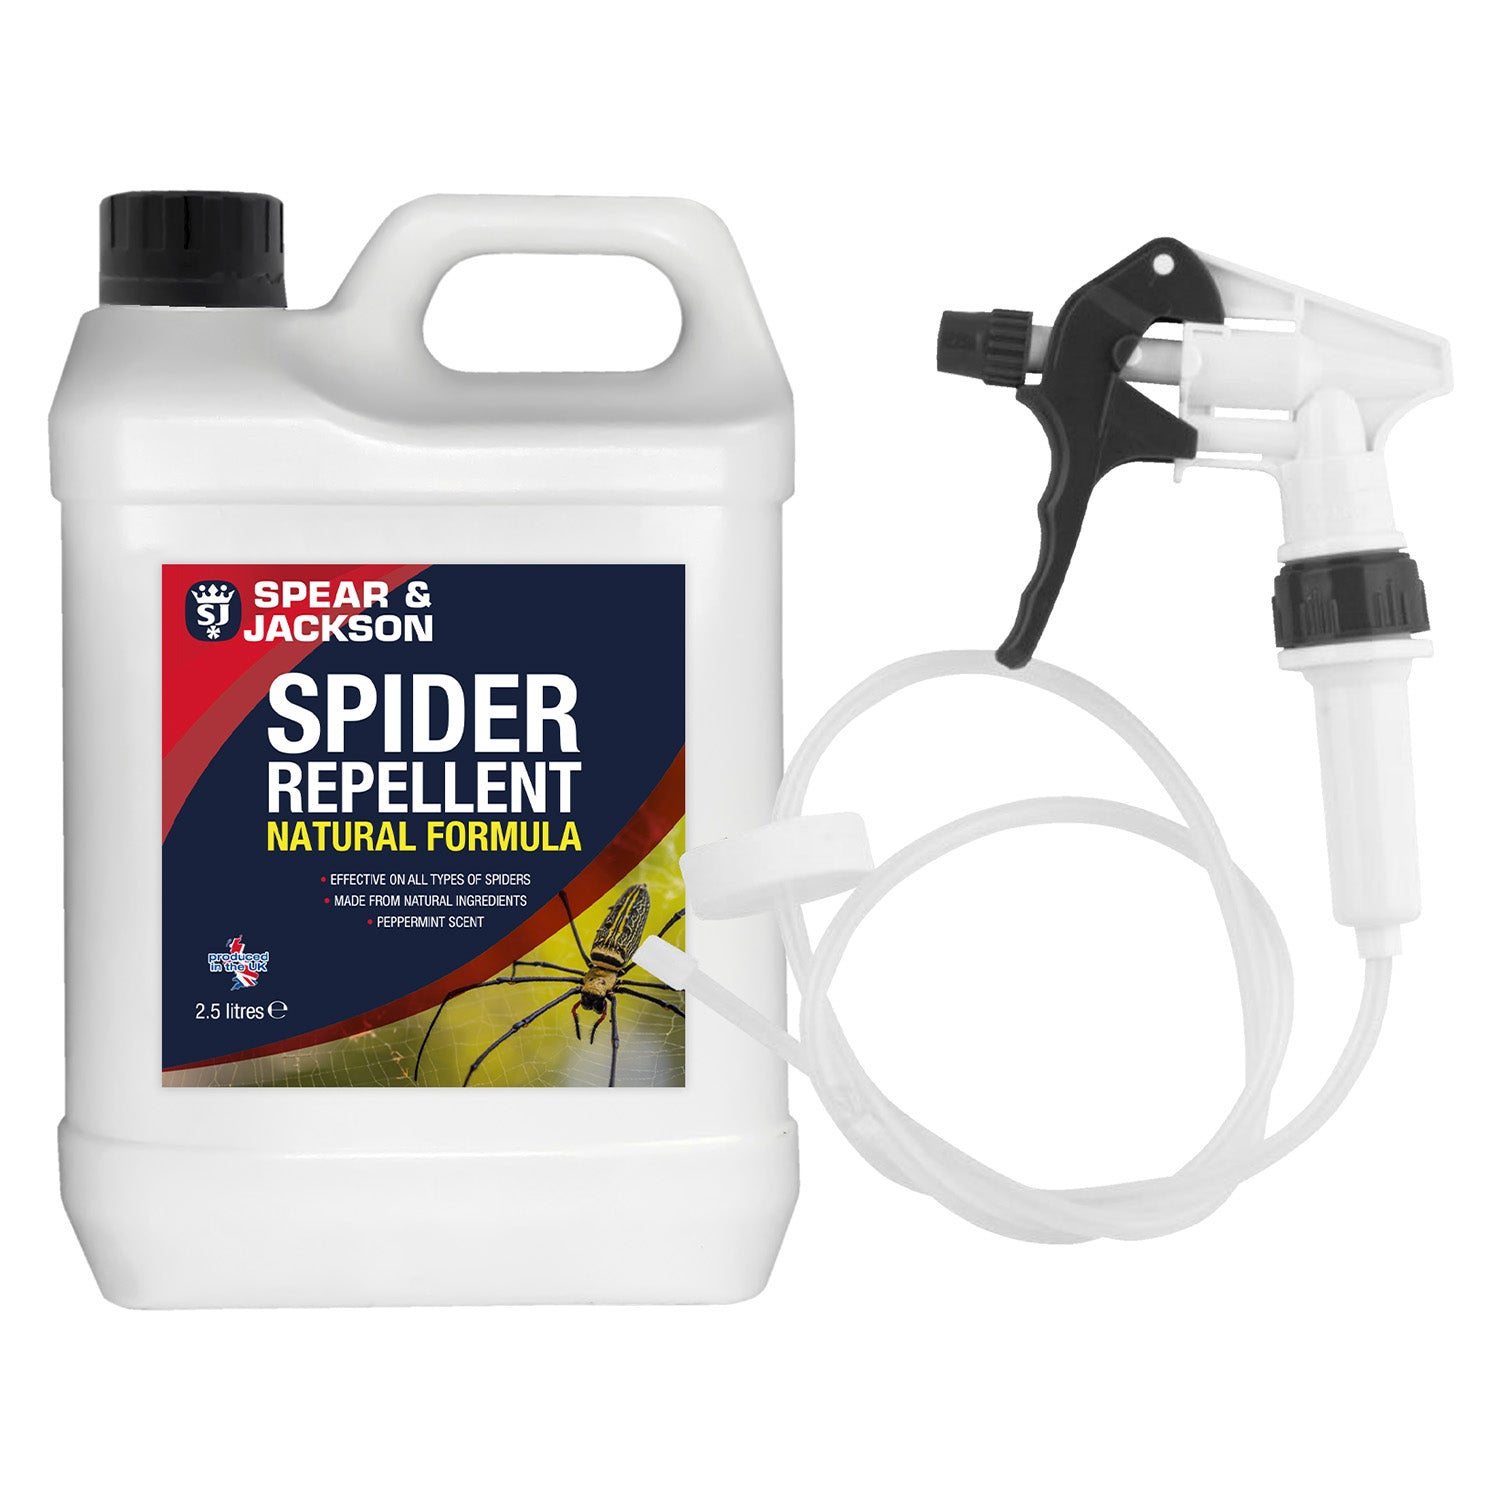 Spear & Jackson Spider Repellent - 2.5L with Long Hose Trigger